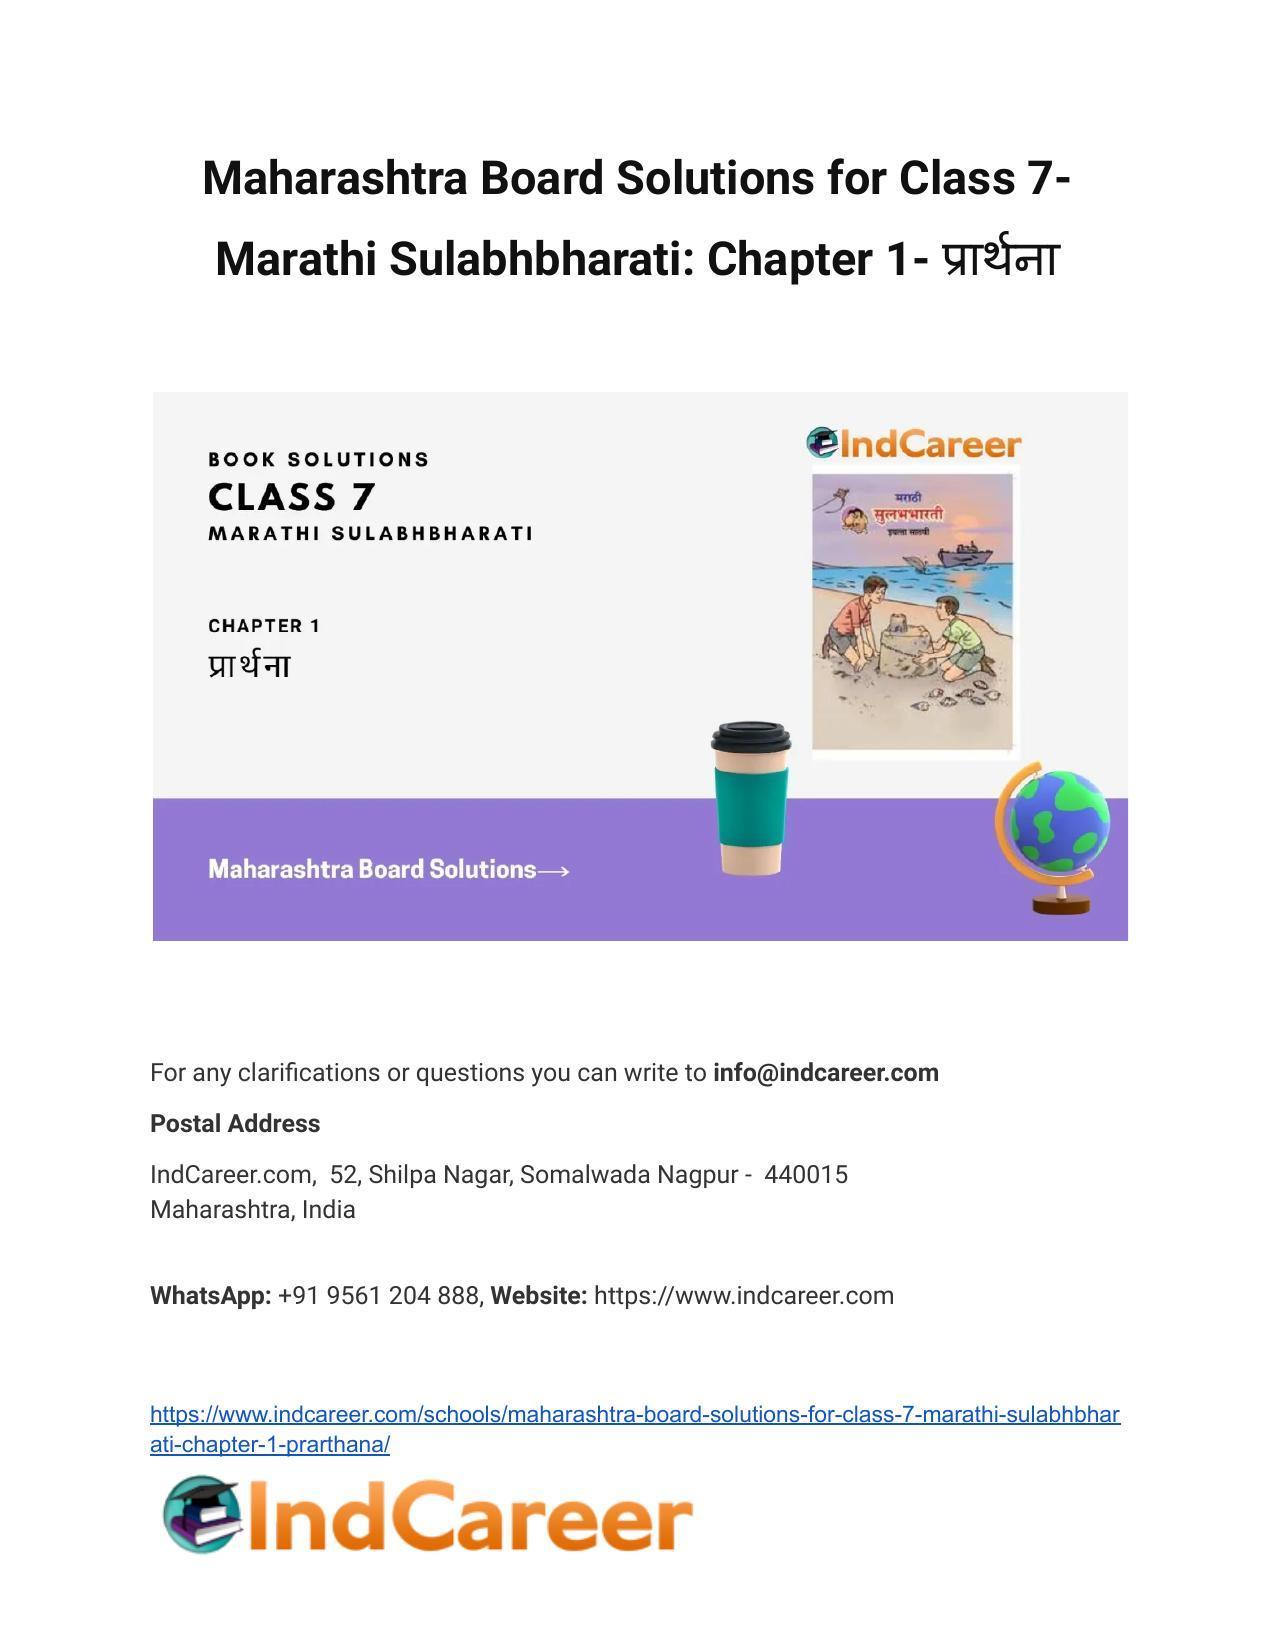 Maharashtra Board Solutions for Class 7- Marathi Sulabhbharati: Chapter 1- प्रार्थना - Page 1